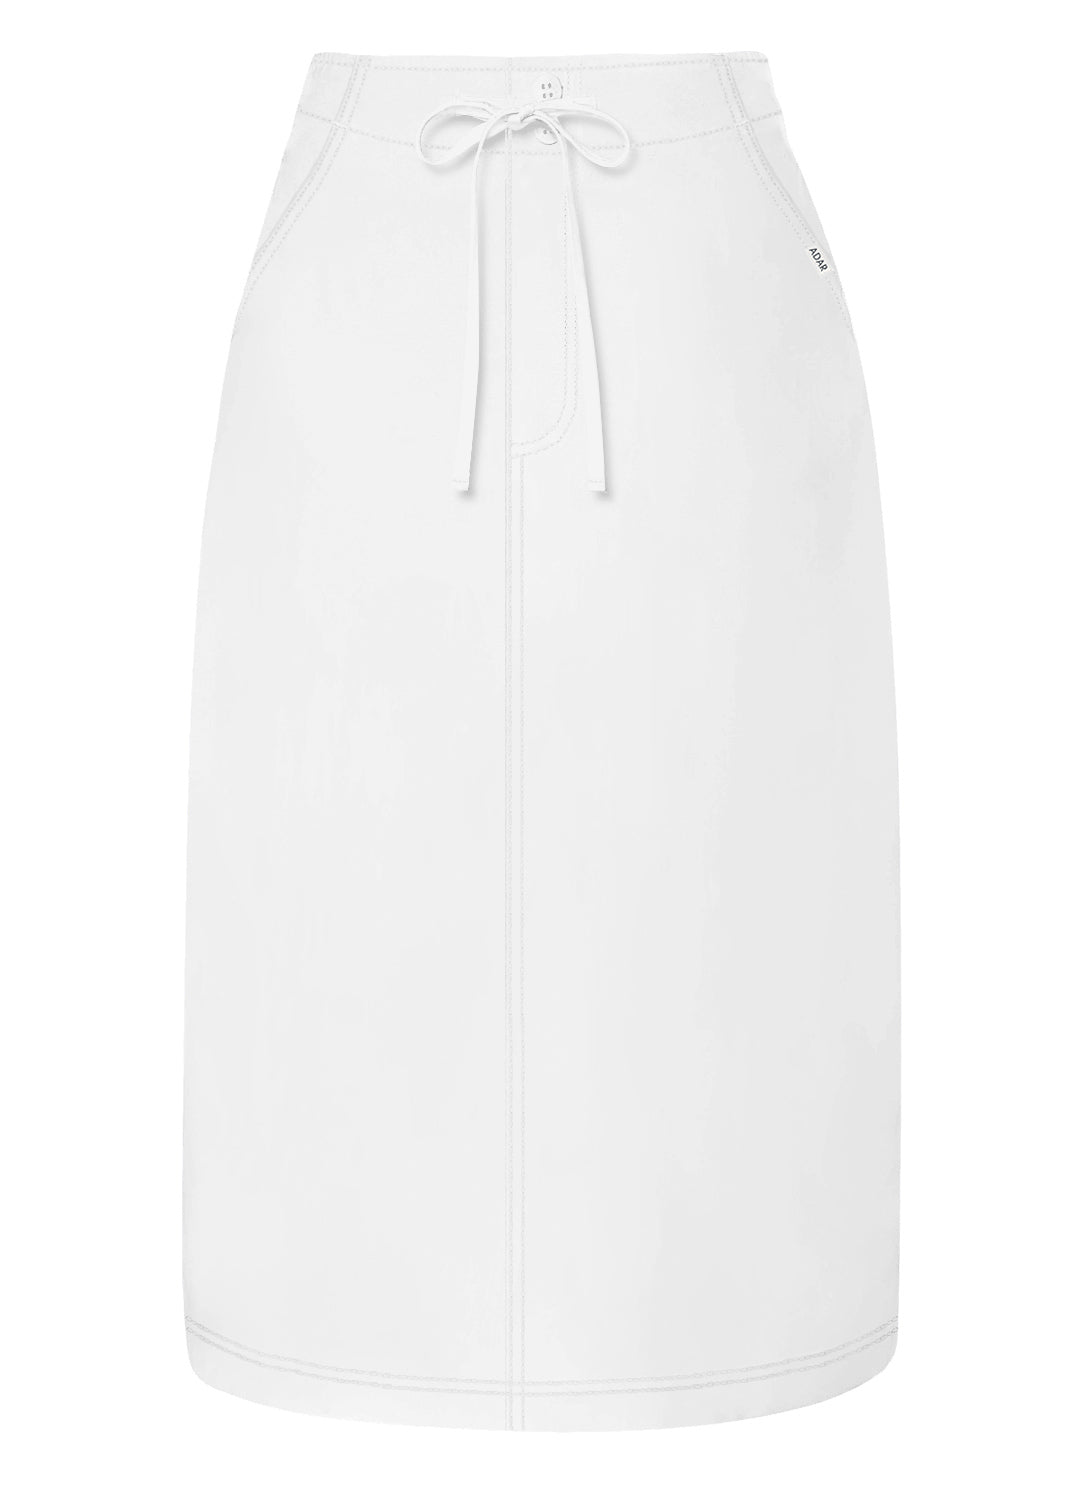 Adar Universal Mid-Calf Length Drawstring Skirt (More Color)